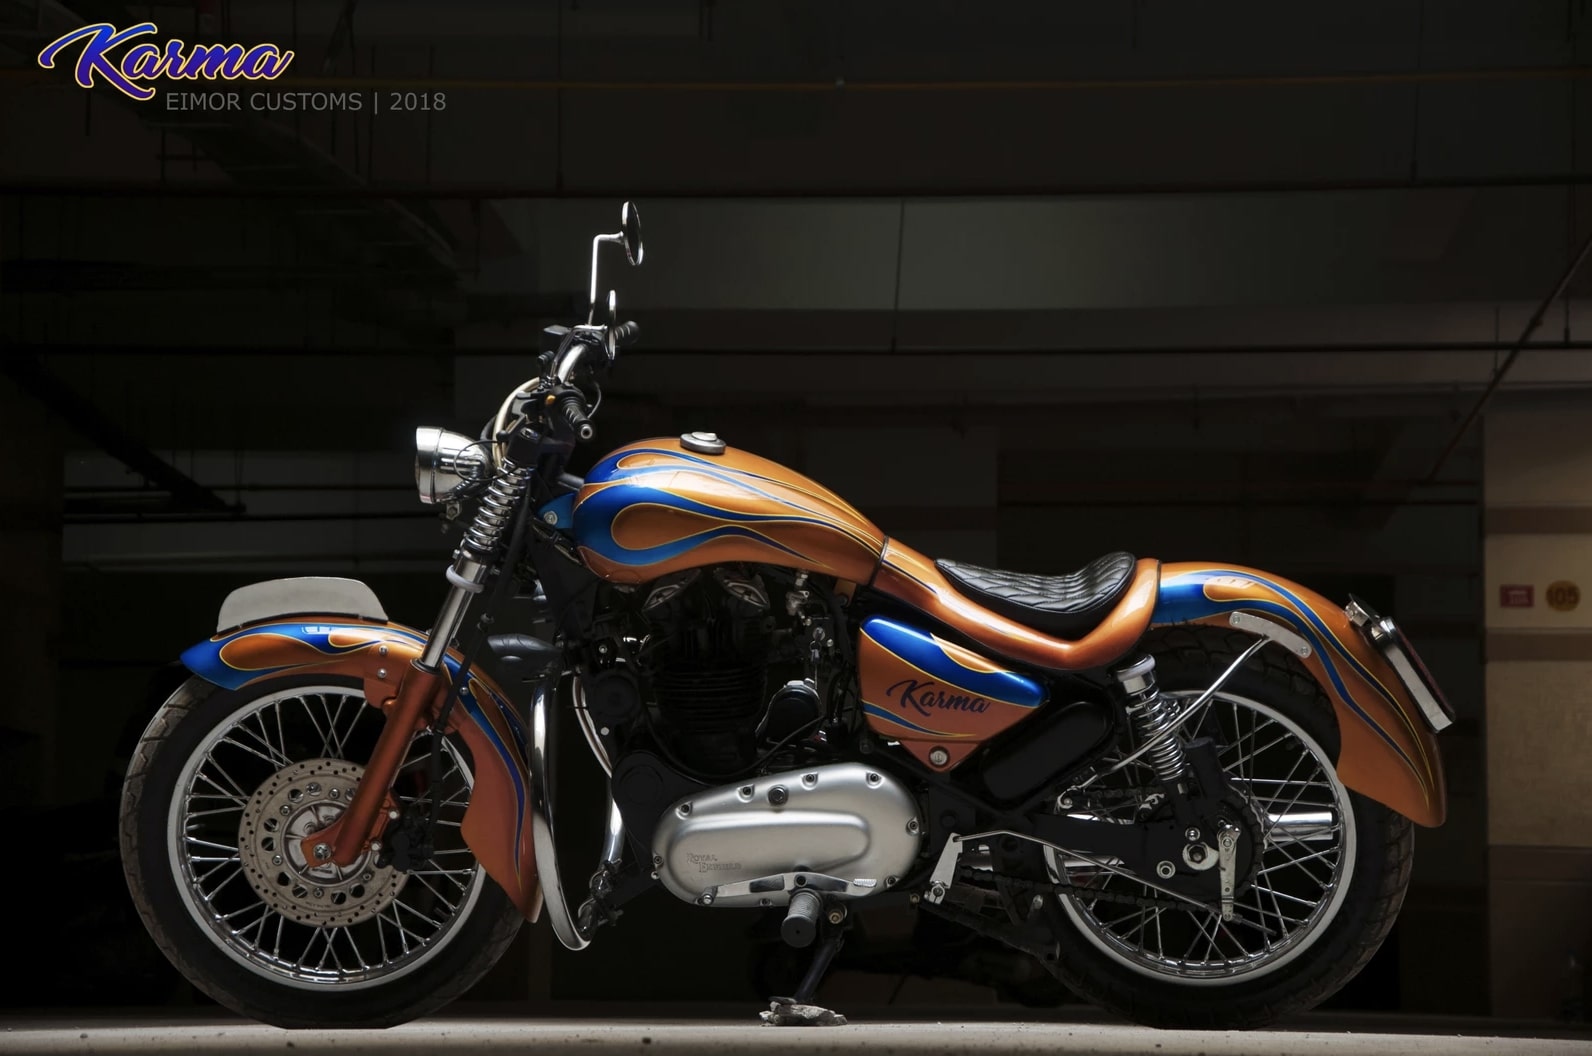 Meet Karma 350 - Based on the Royal Enfield Thunderbird Motorcycle - bottom